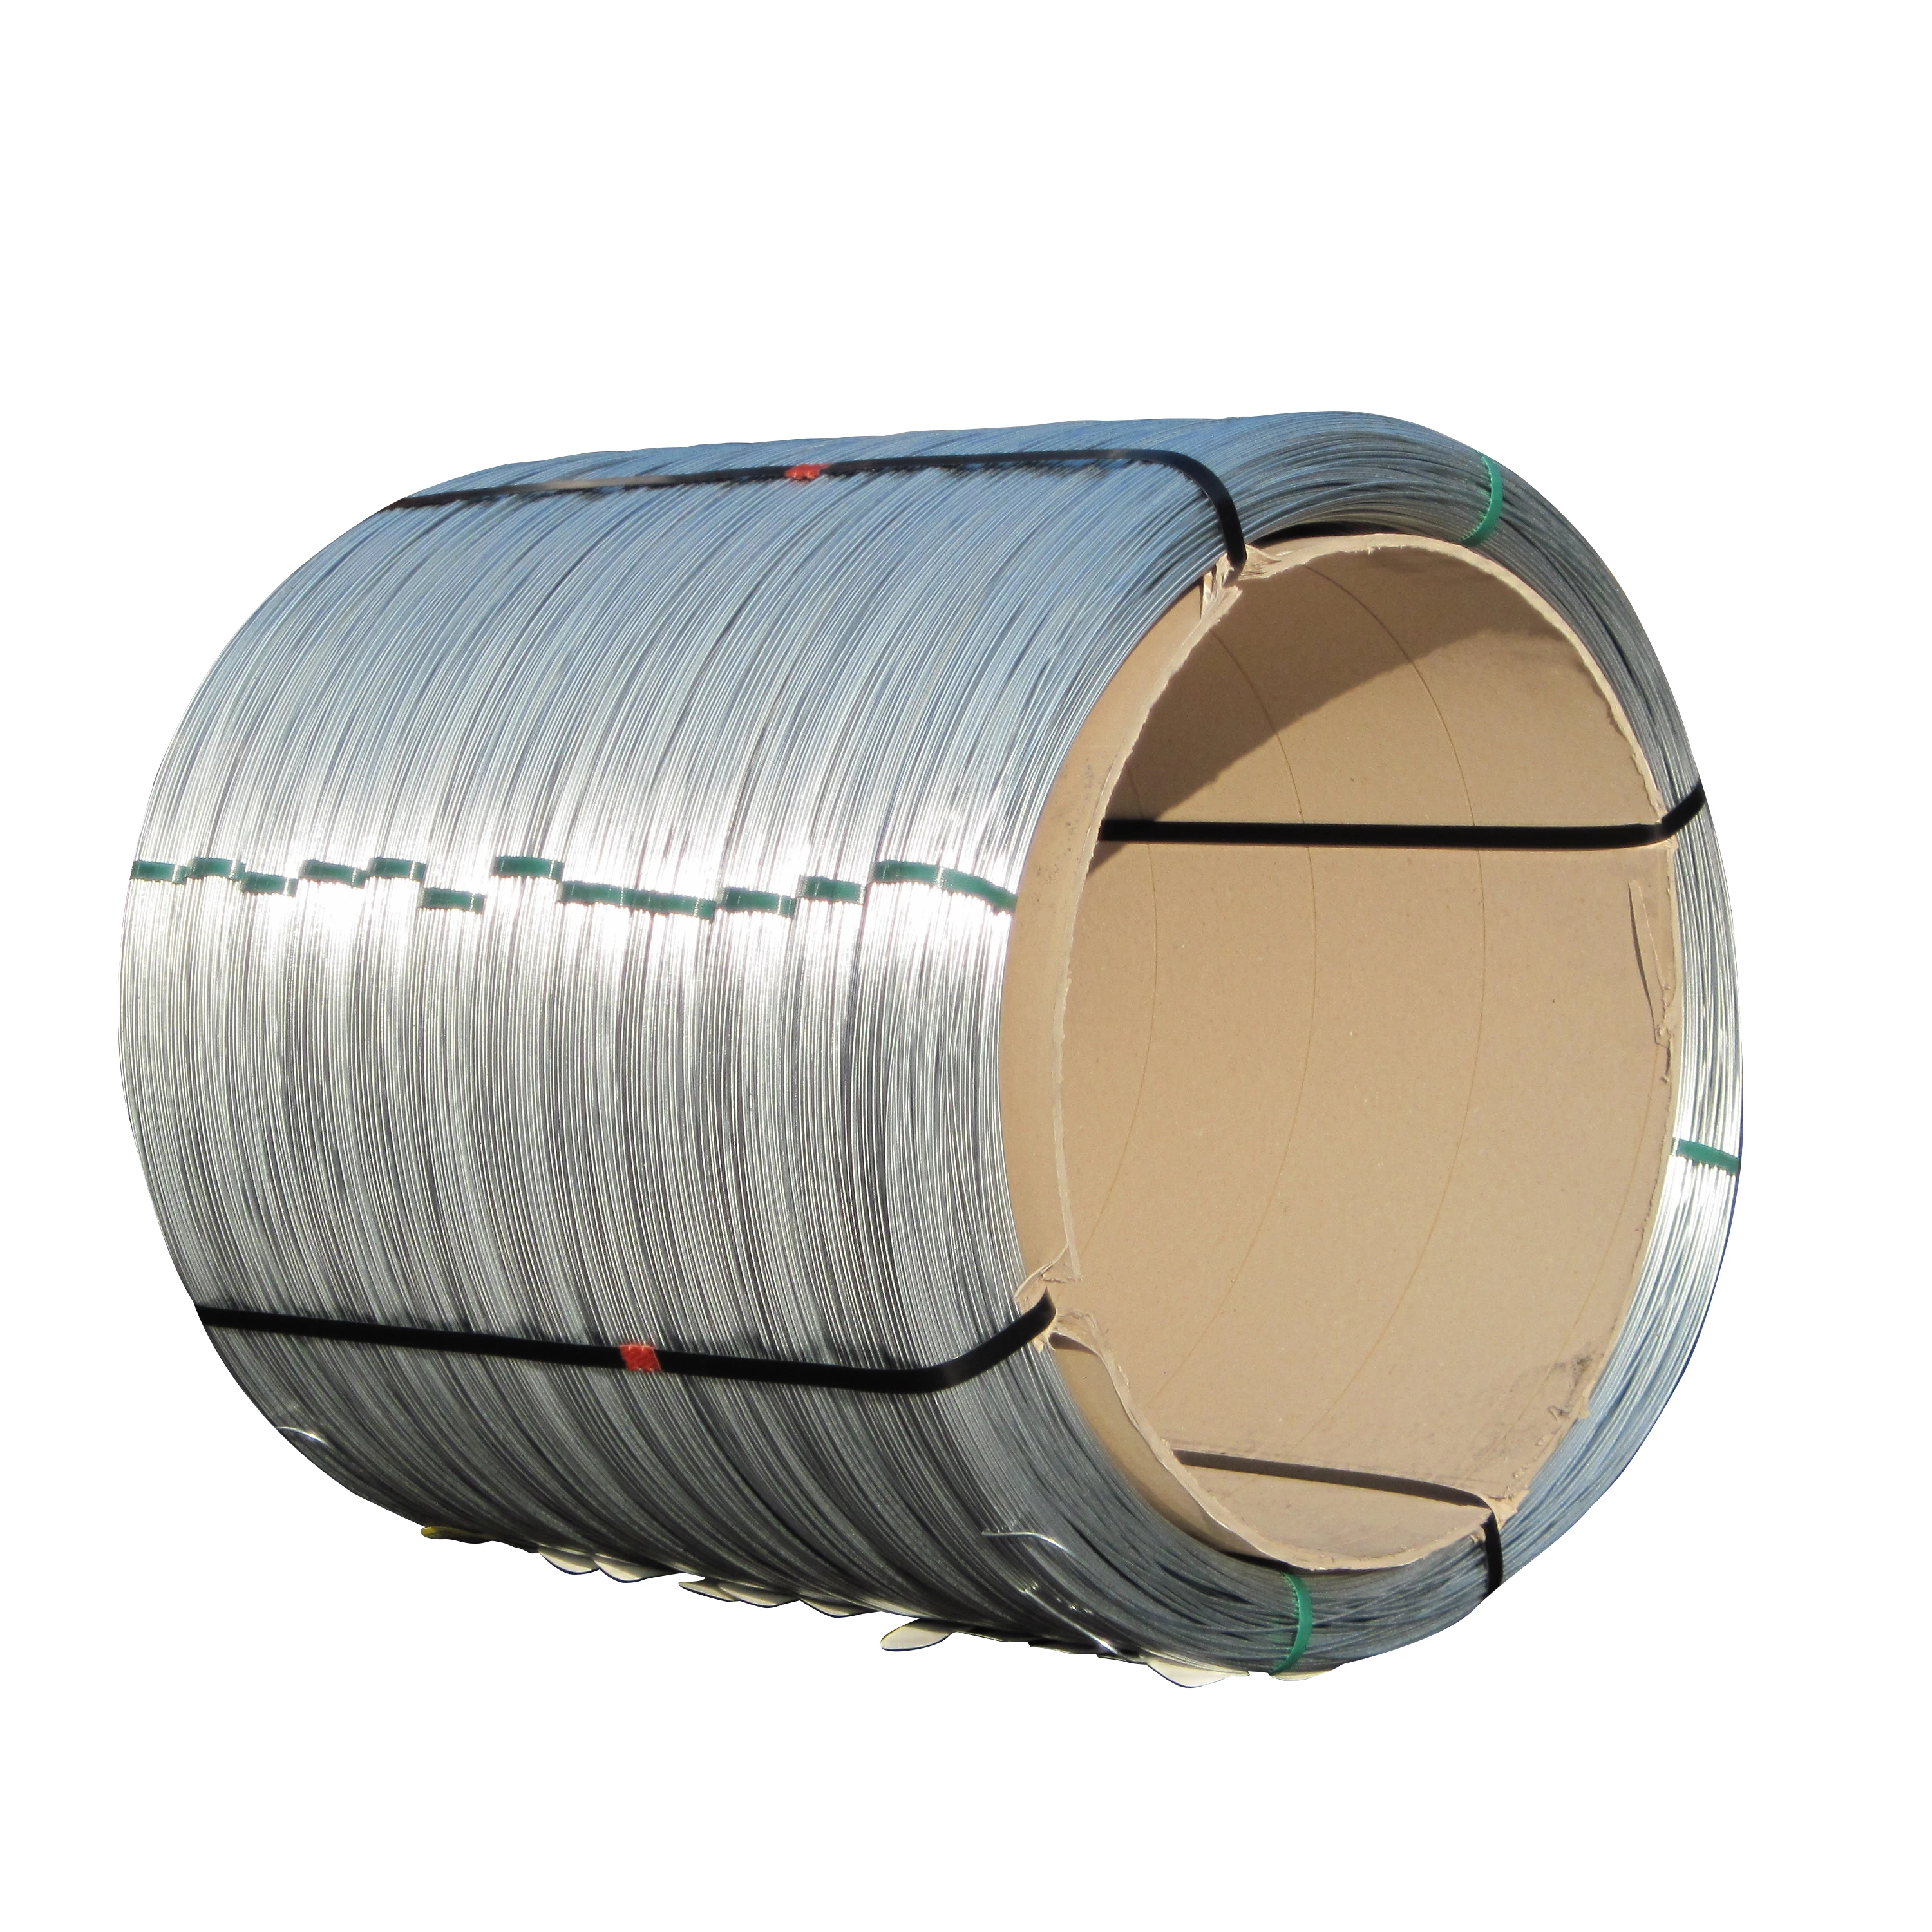 Top quality Italian zinc-aluminium steel wire diam. 2.20 mm for vineyards plants